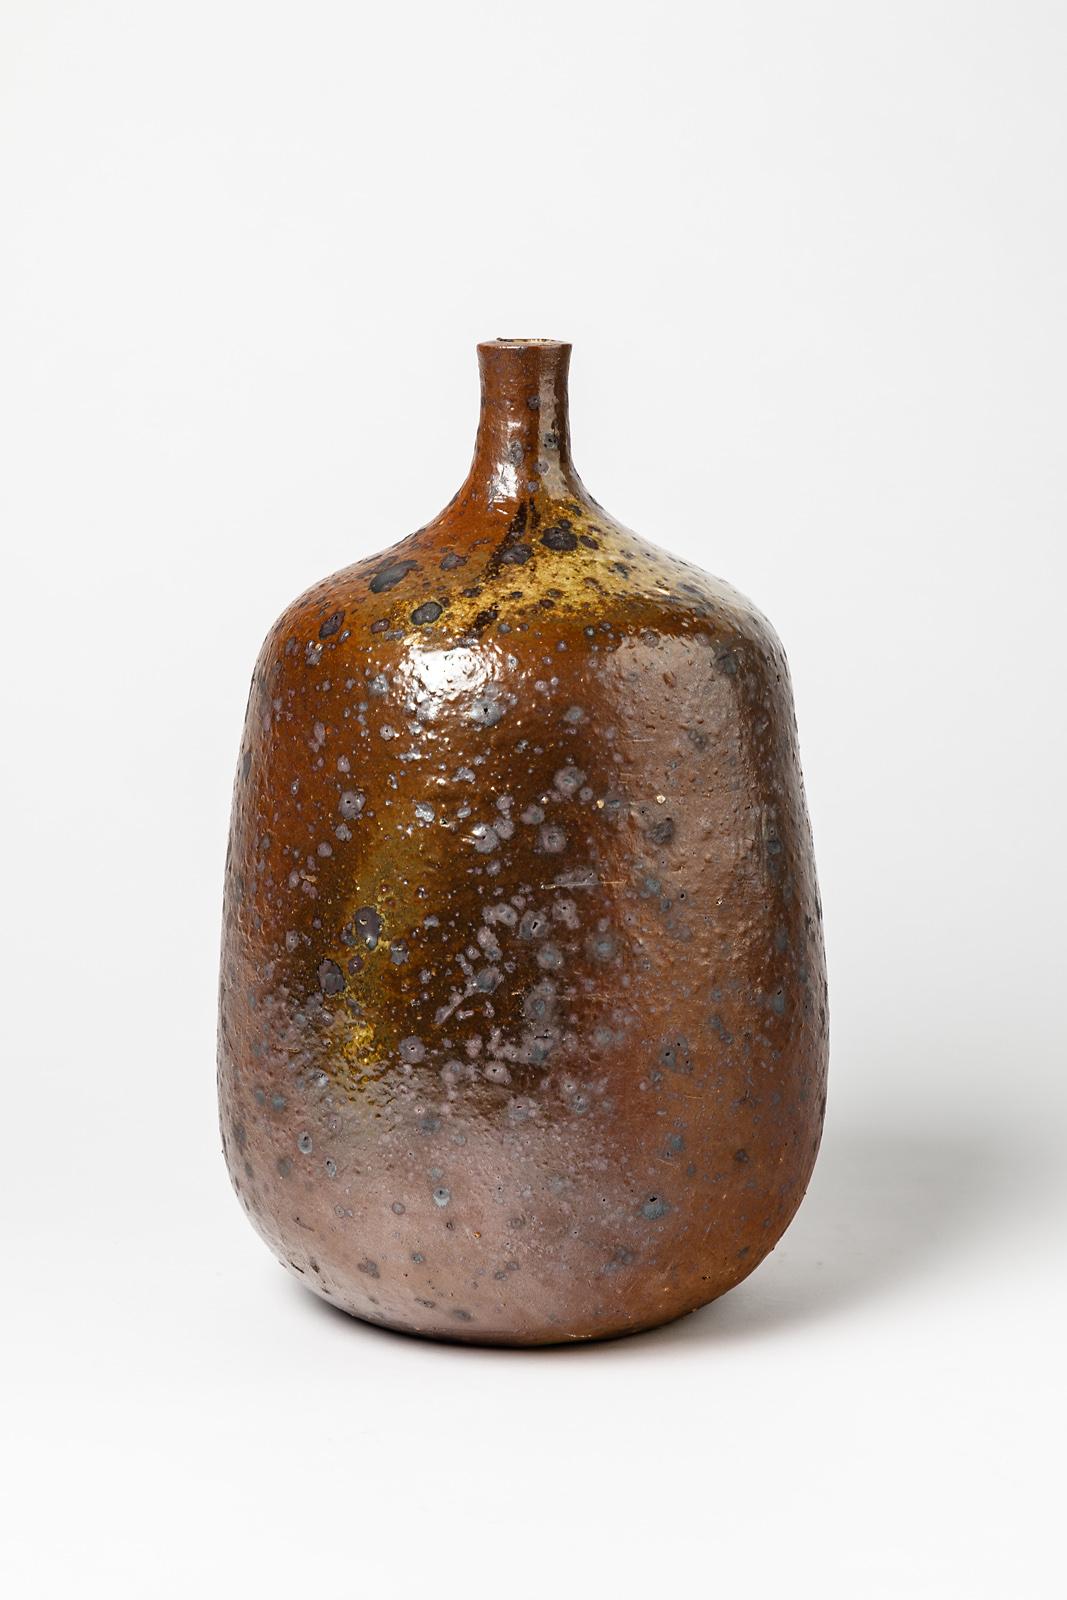 French Pierre Digan Brown Stoneware Ceramic Bottle or Vase La Borne Midcentury Design